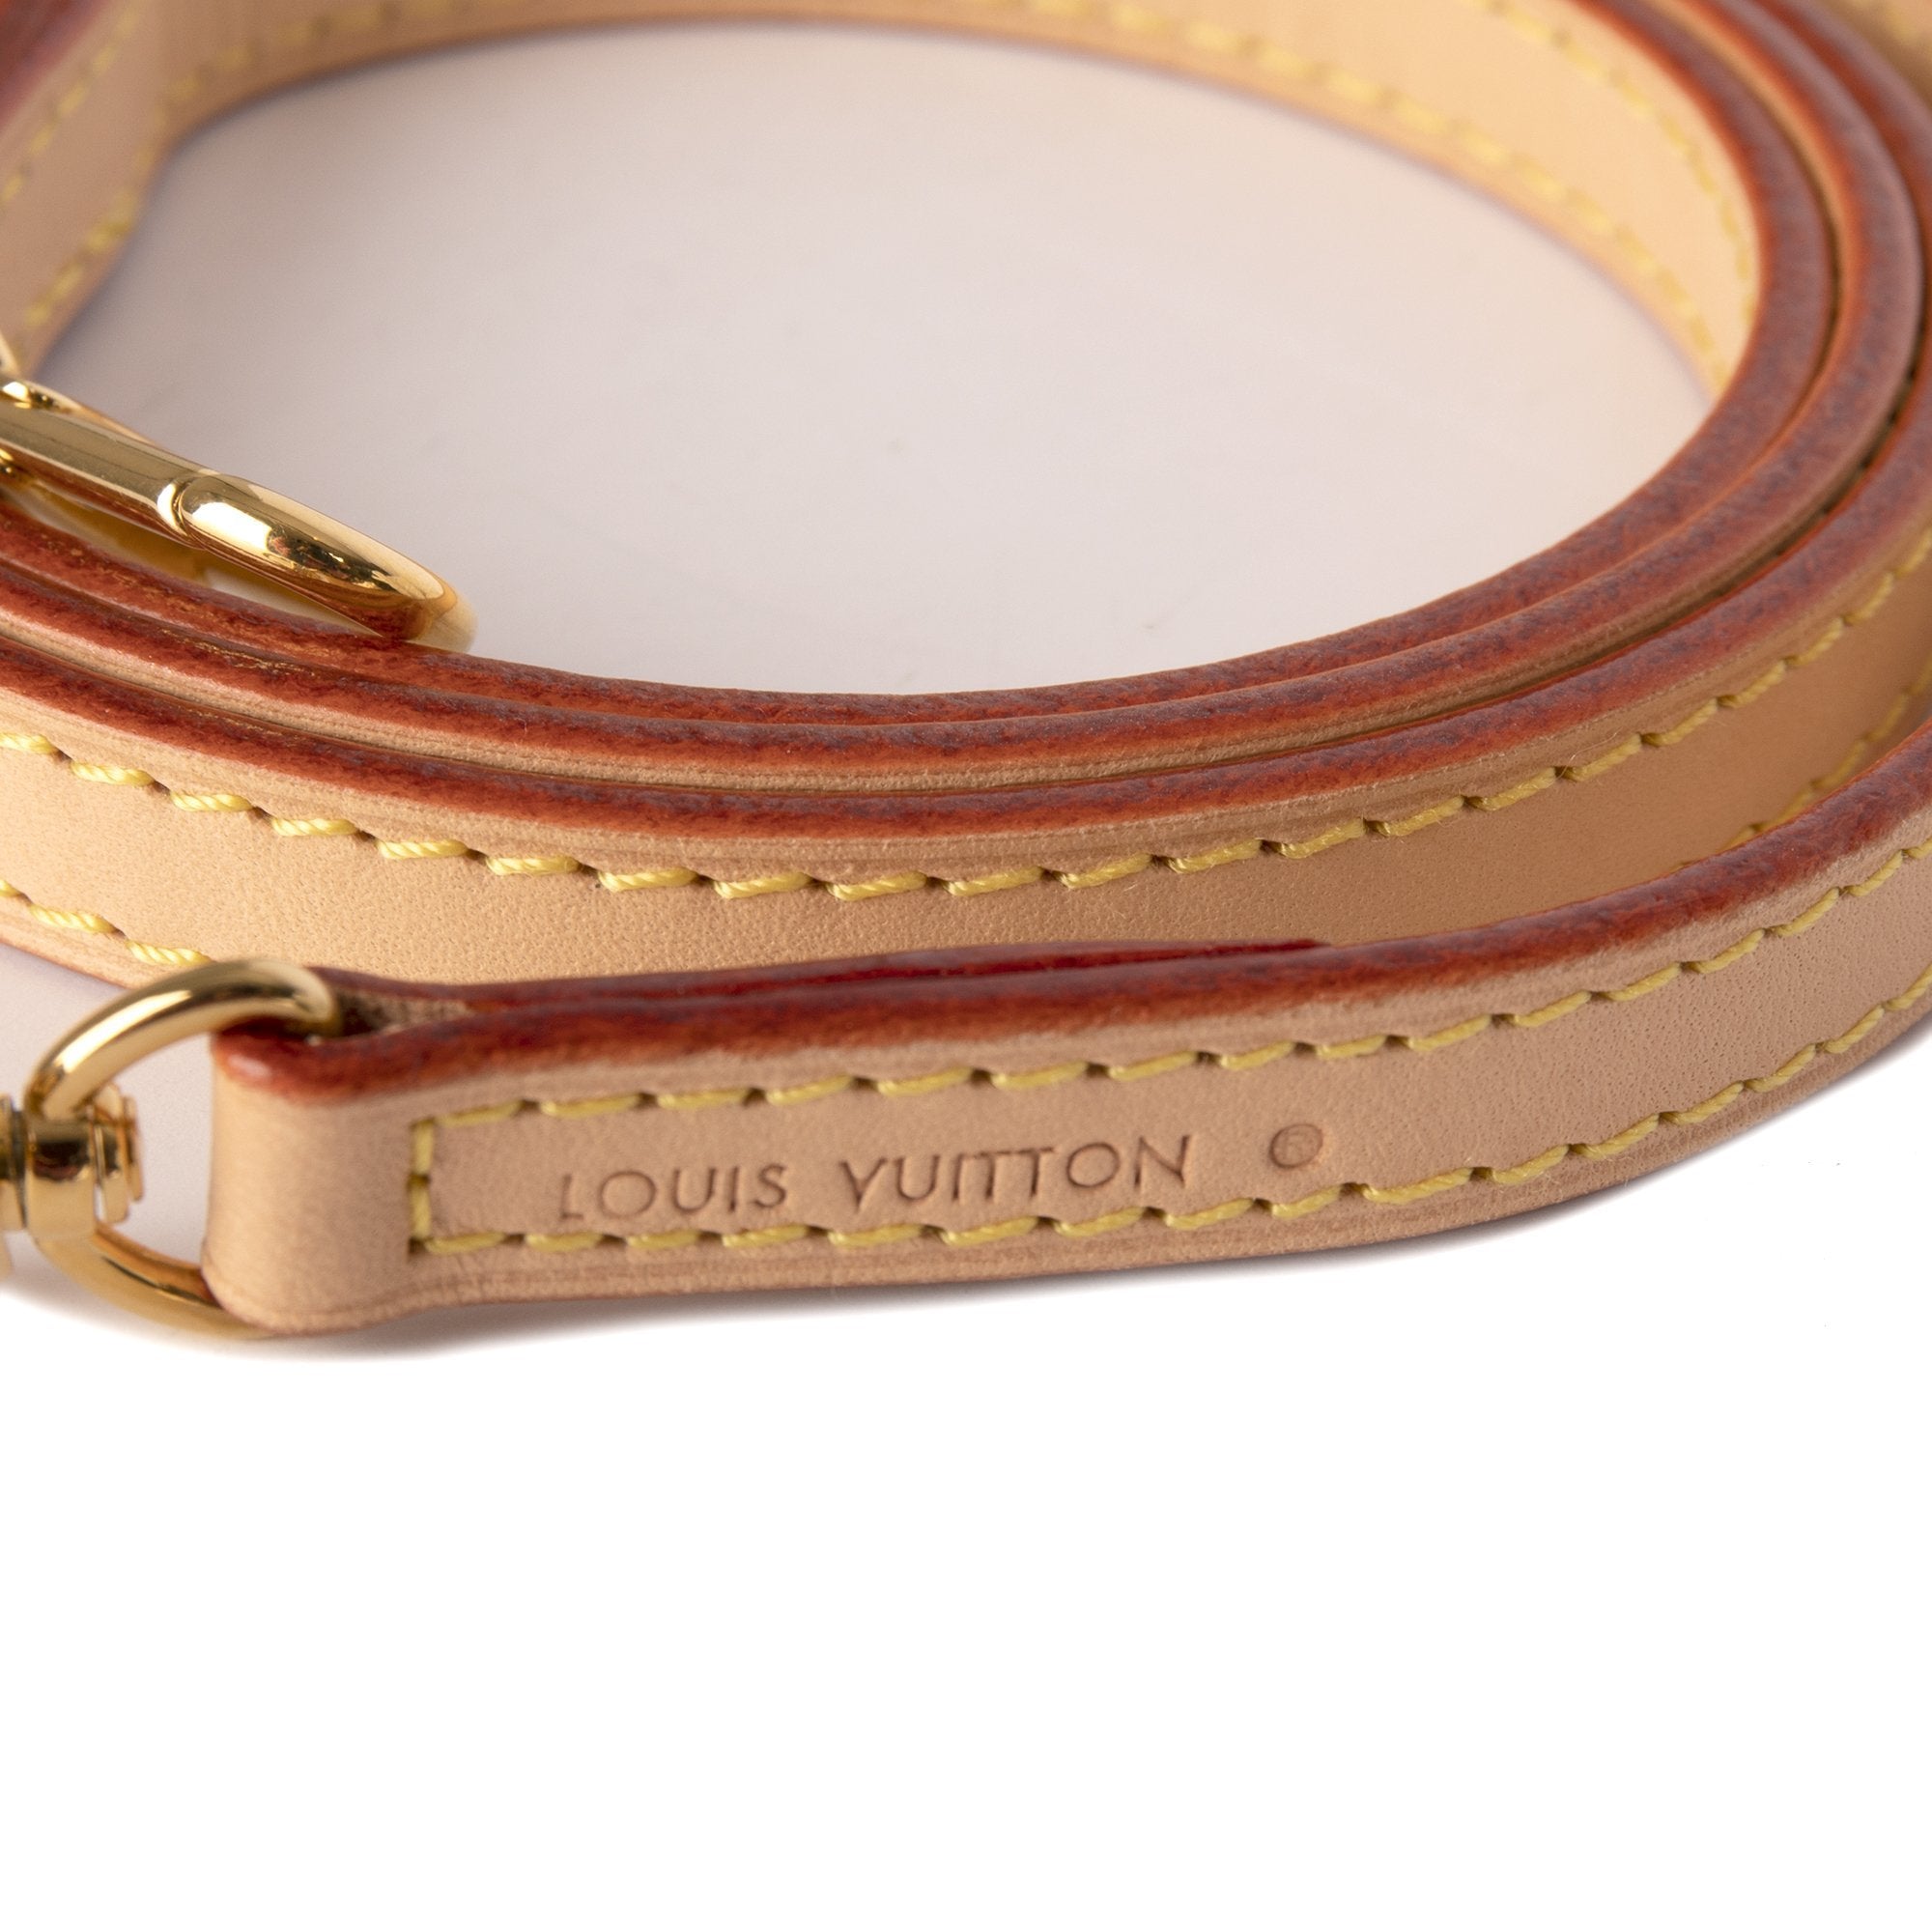 Products By Louis Vuitton : Adjustable Shoulder Strap Vvn